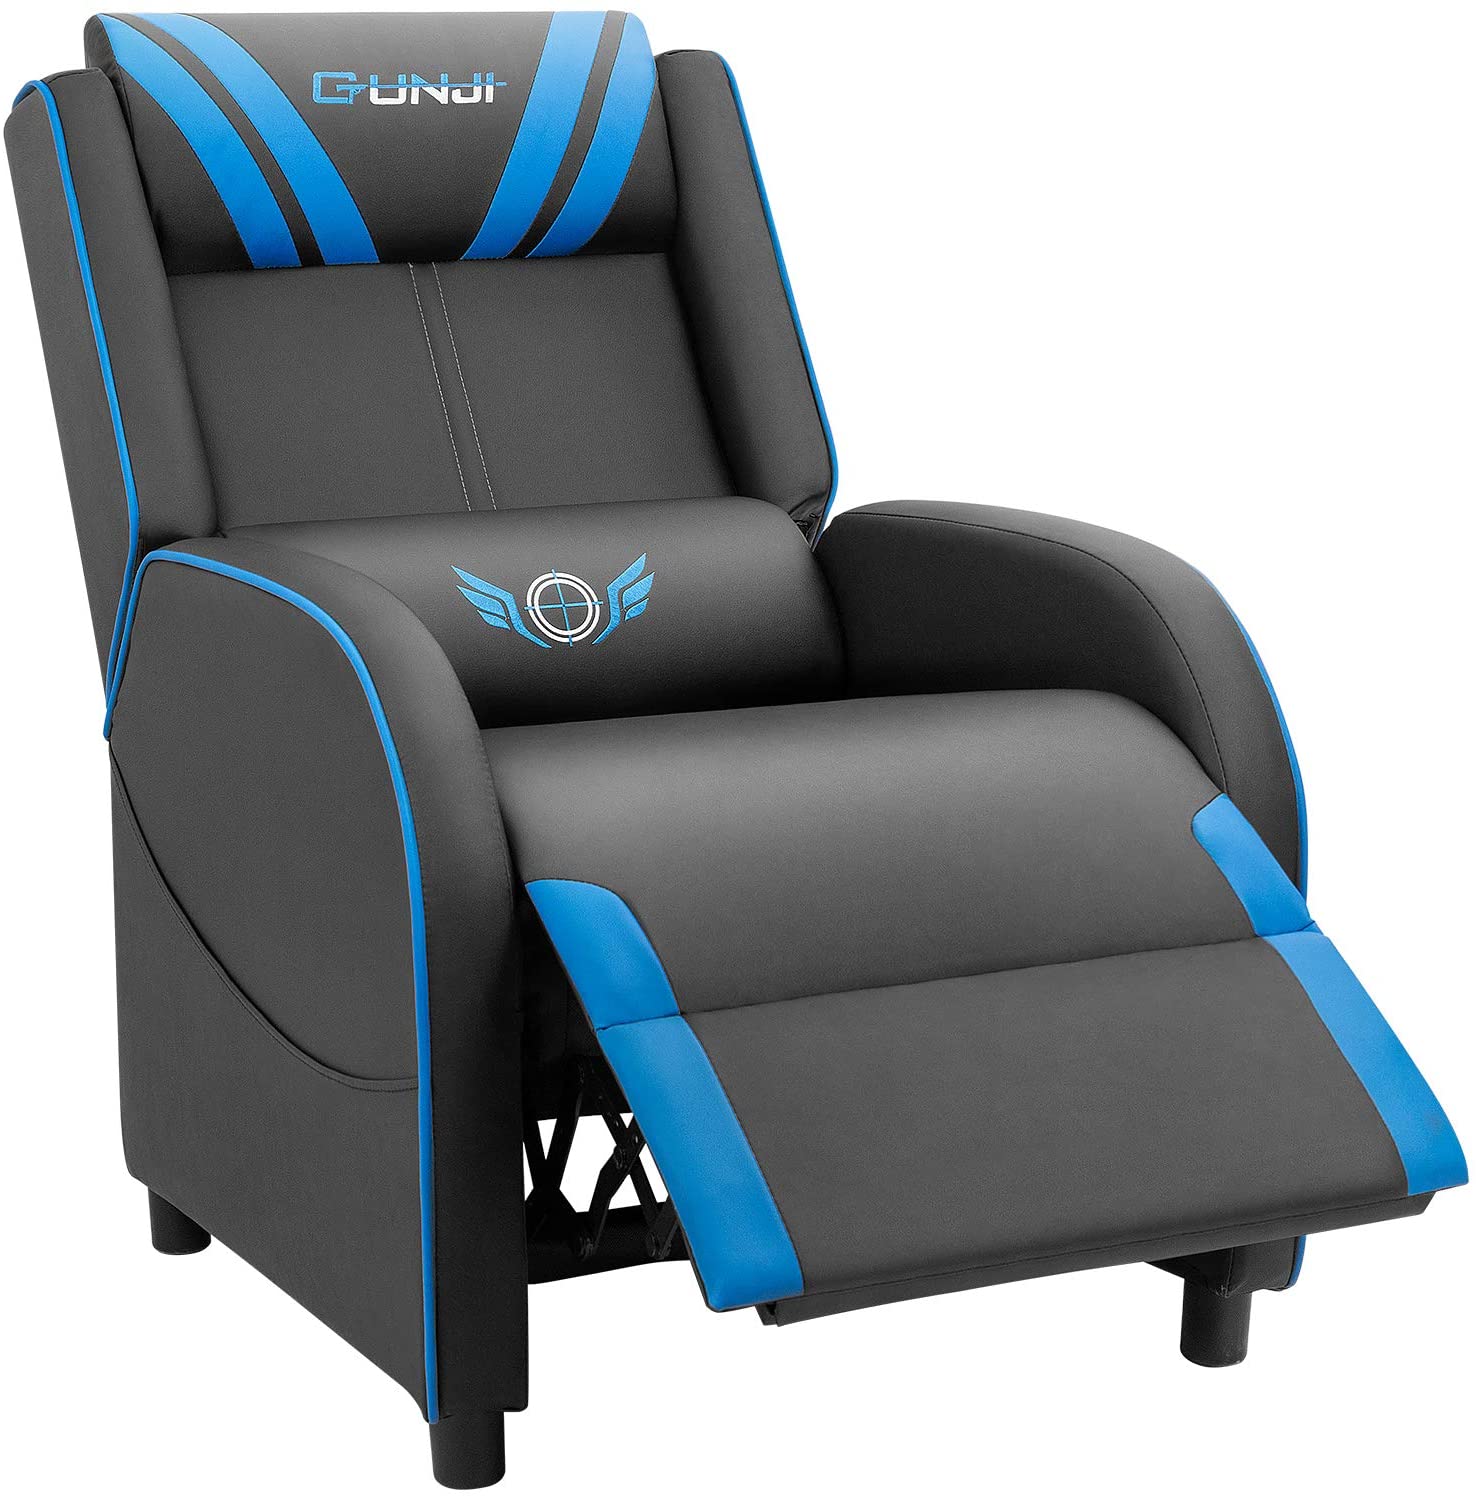 JUMMICO Gaming Recliner Chair